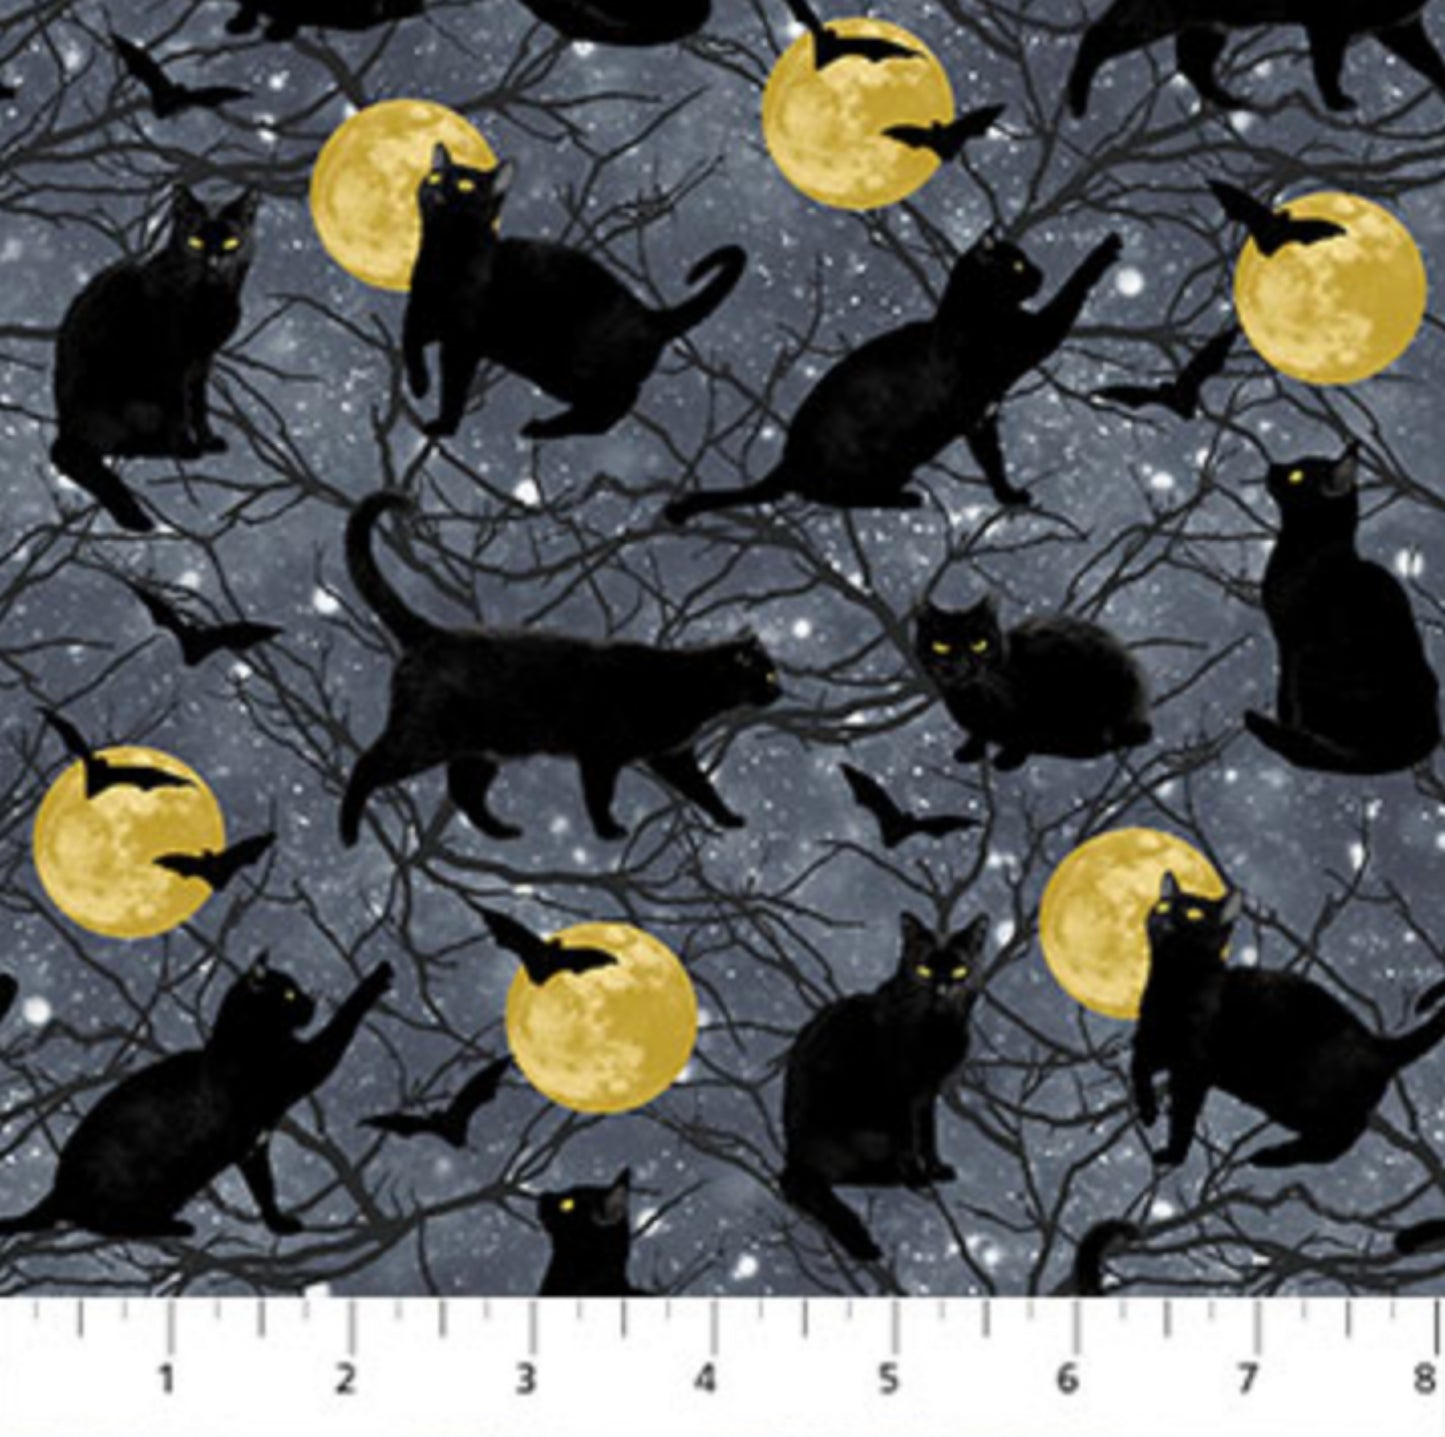 Hocus Pocus - Moons & Cats by Deborah Edwards for Northcott Fabrics - 25447-96 - Gray Multi